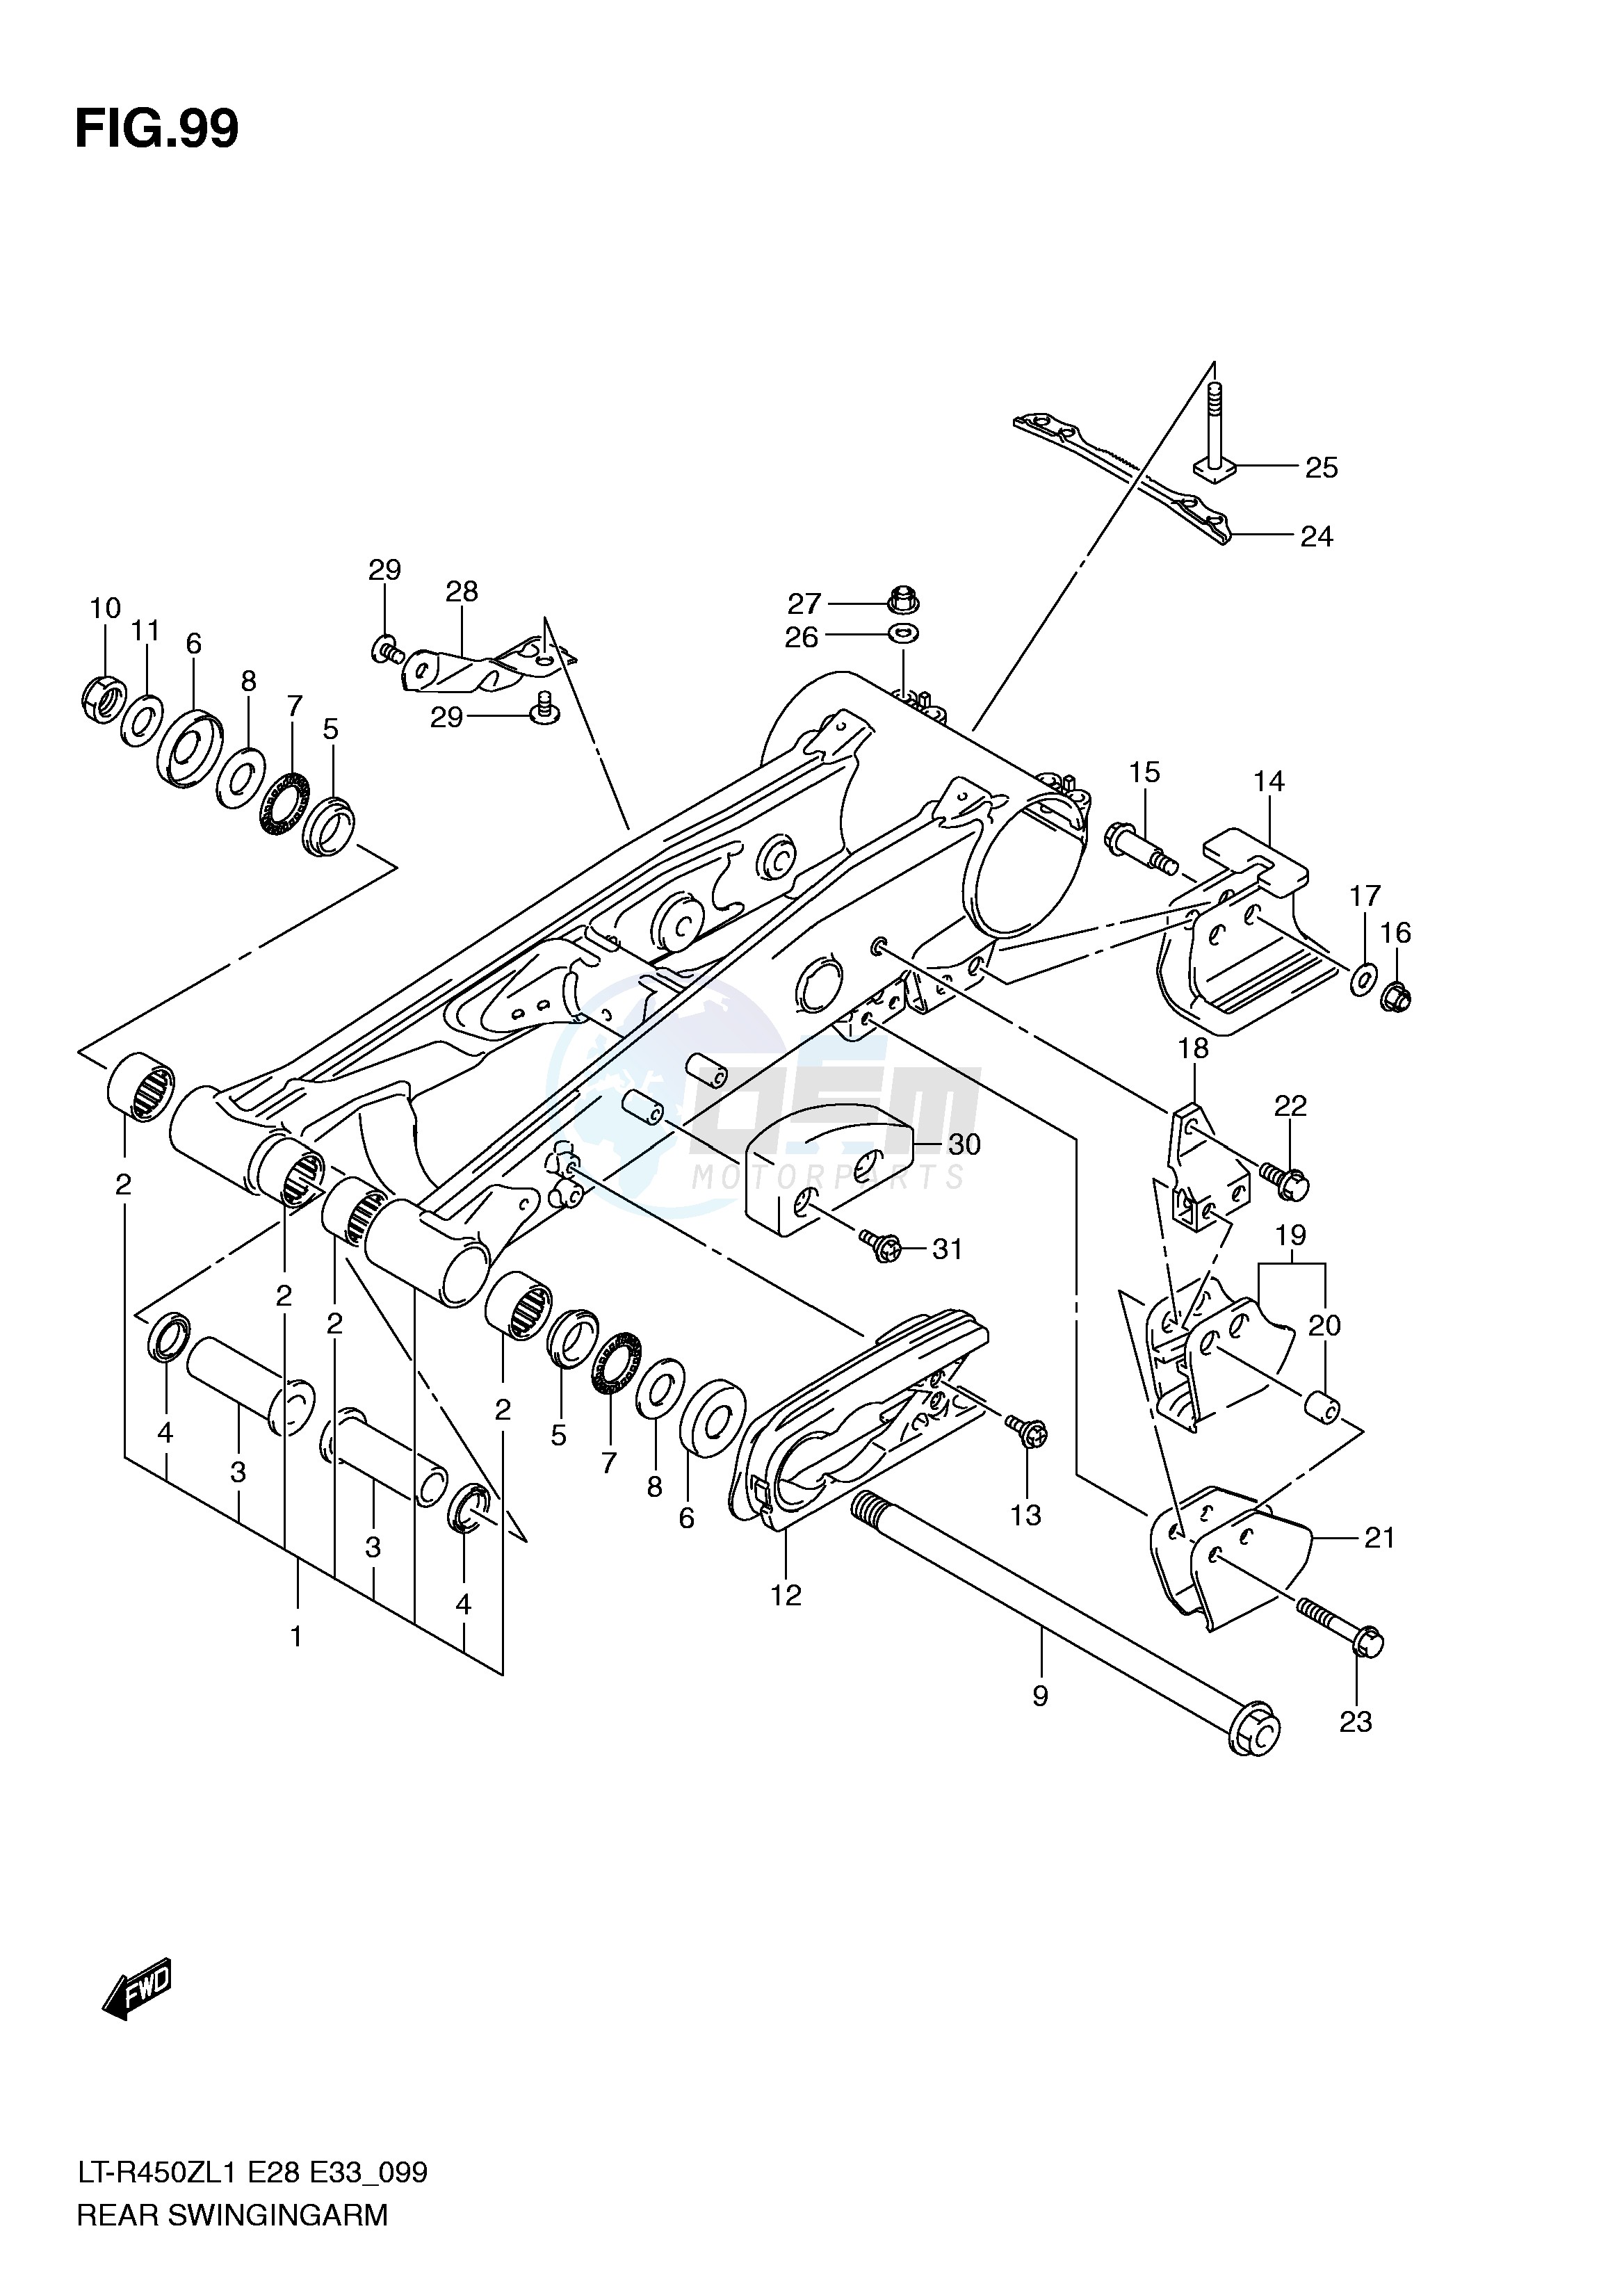 REAR SWINGING ARM (LT-R450ZL1 E28) blueprint